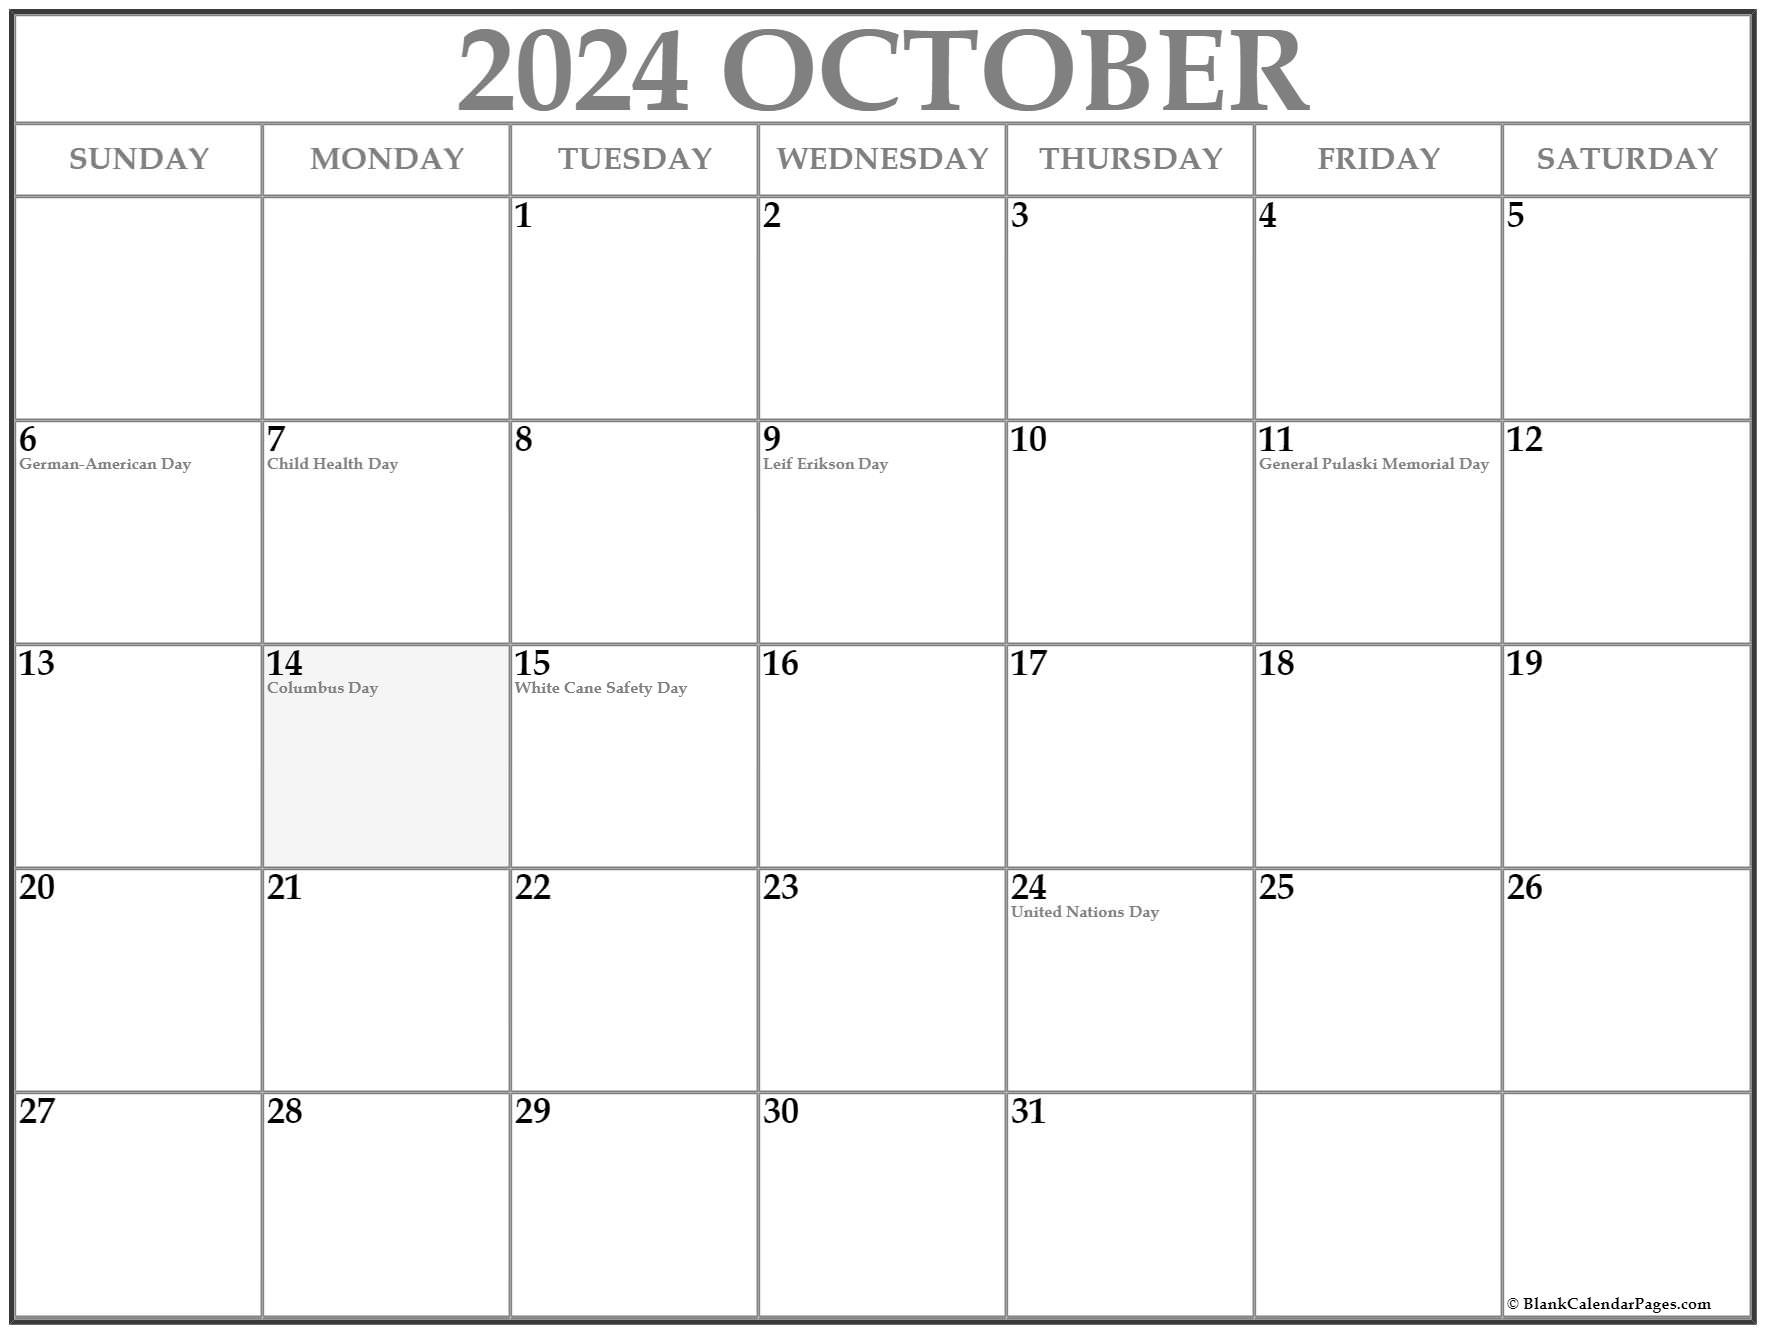 Csuf Spring 2024 Calendar October 2024 Calendar With Holidays Images